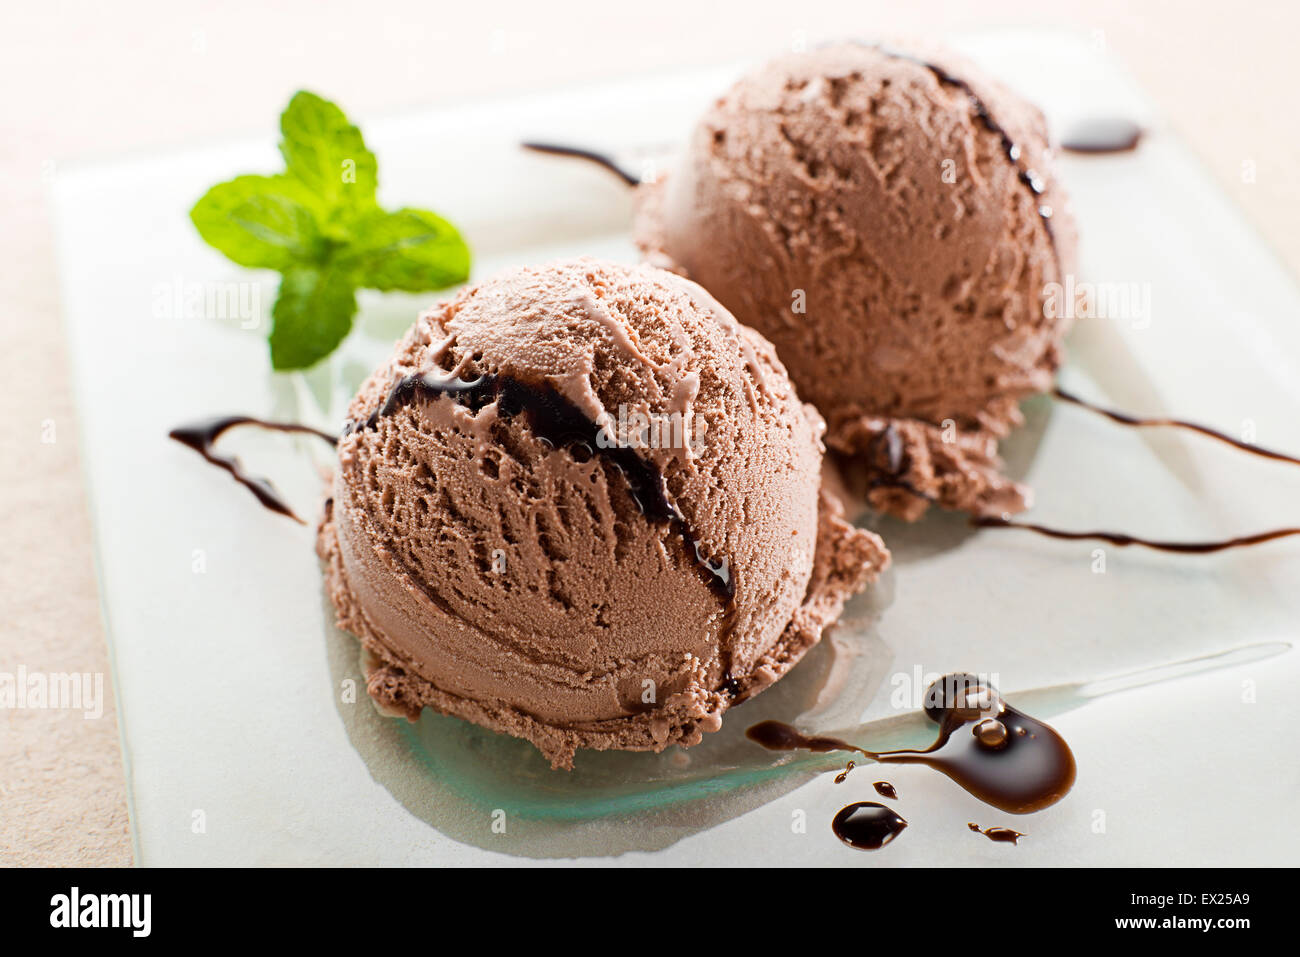 Fresh Chocolate ice cream on a plate close up Stock Photo